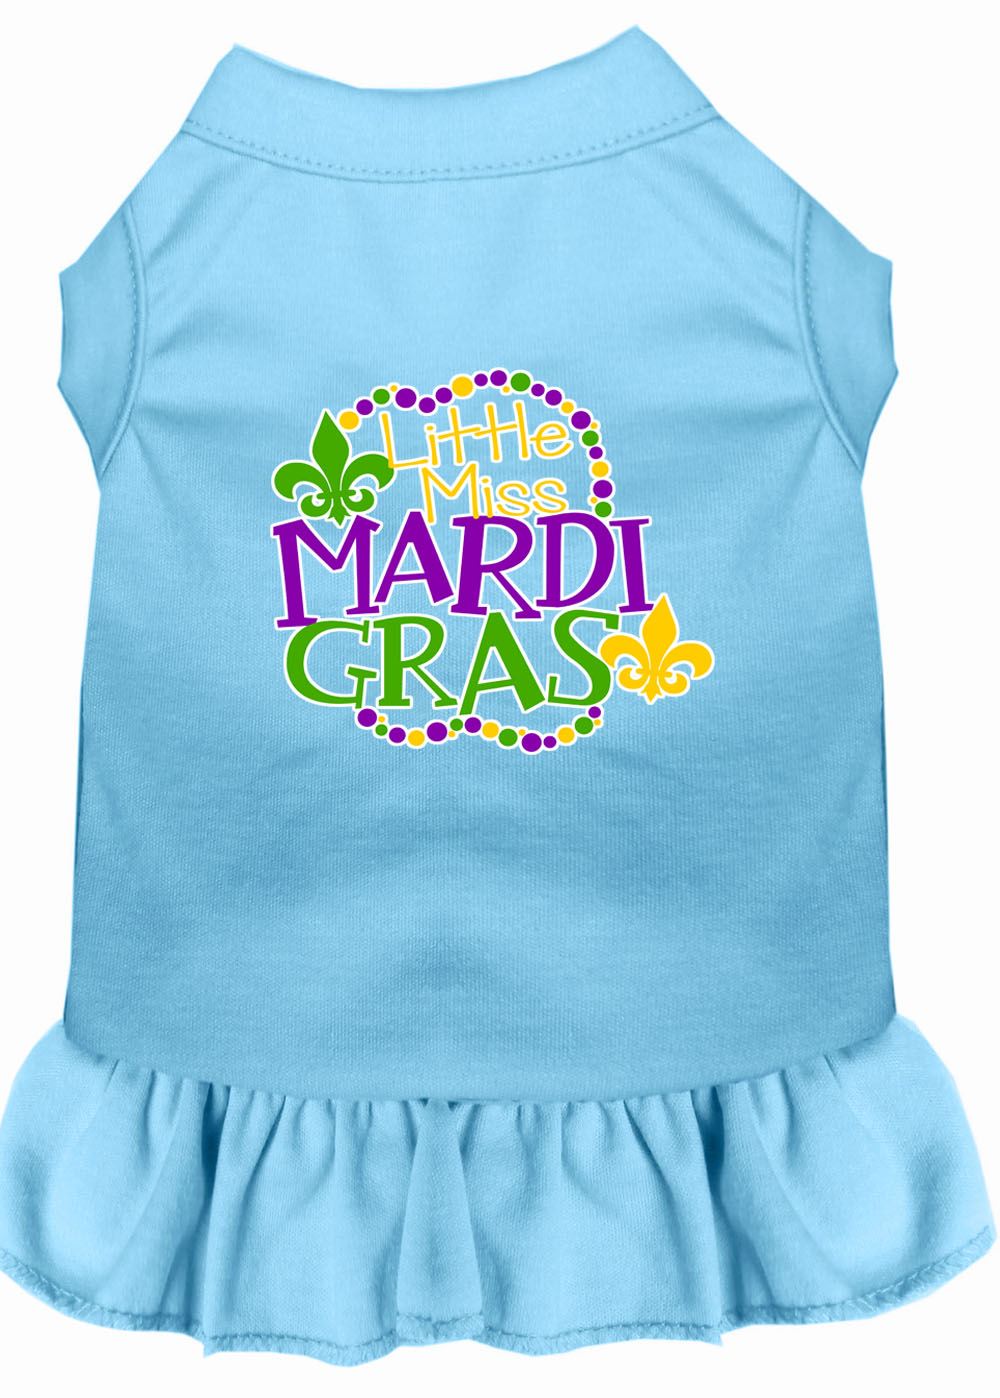 Miss Mardi Gras Screen Print Mardi Gras Dog Dress Baby Blue Sm